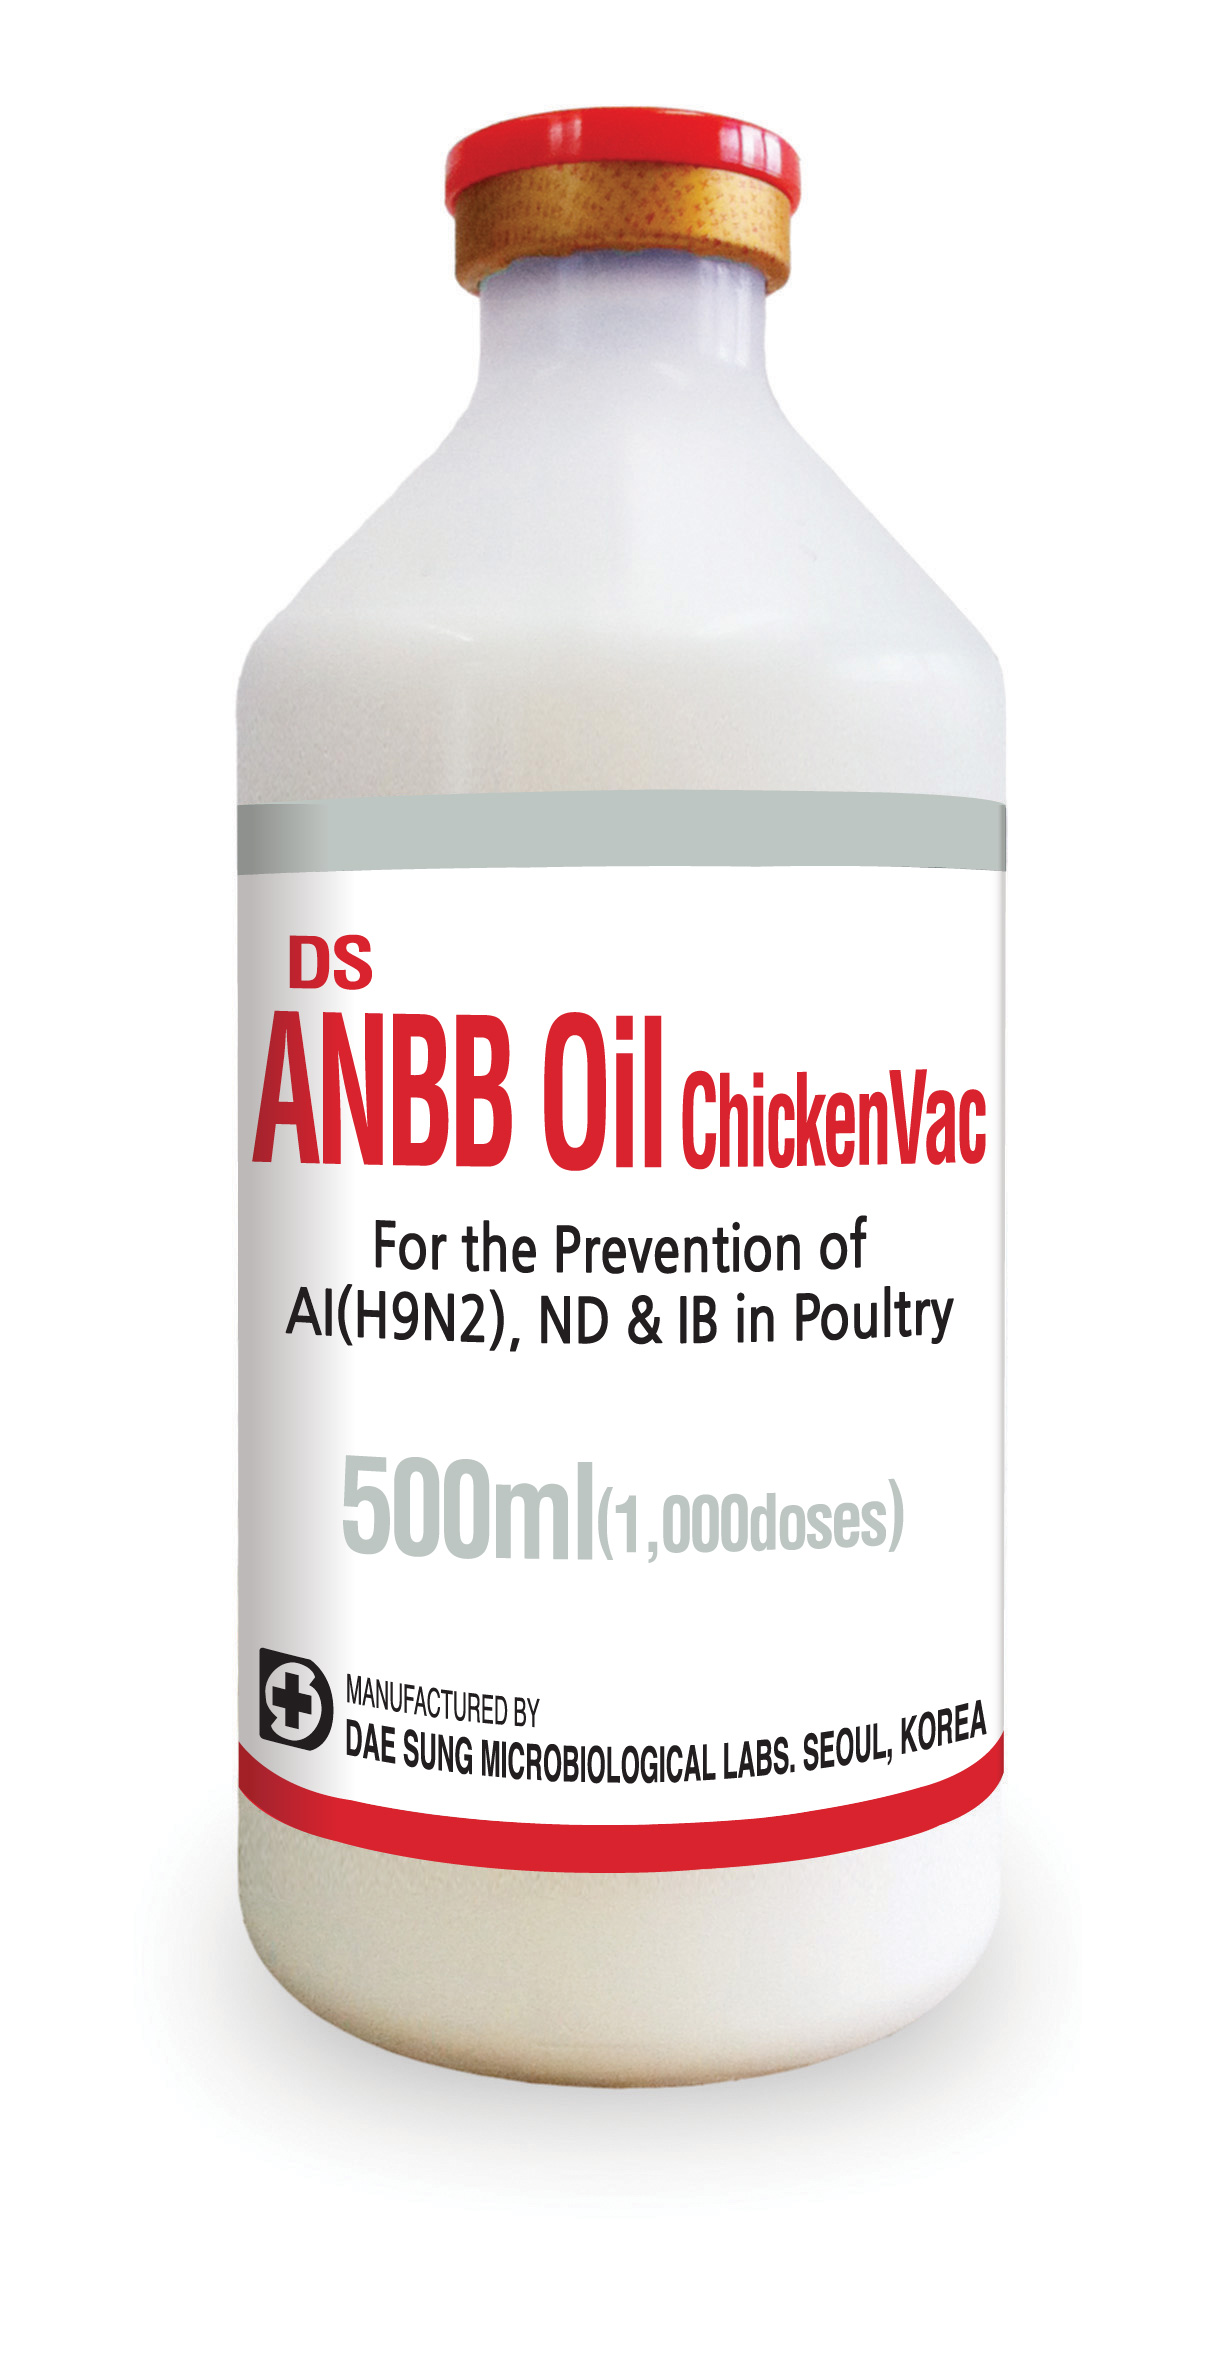 DS ANBB Oil ChickenVac